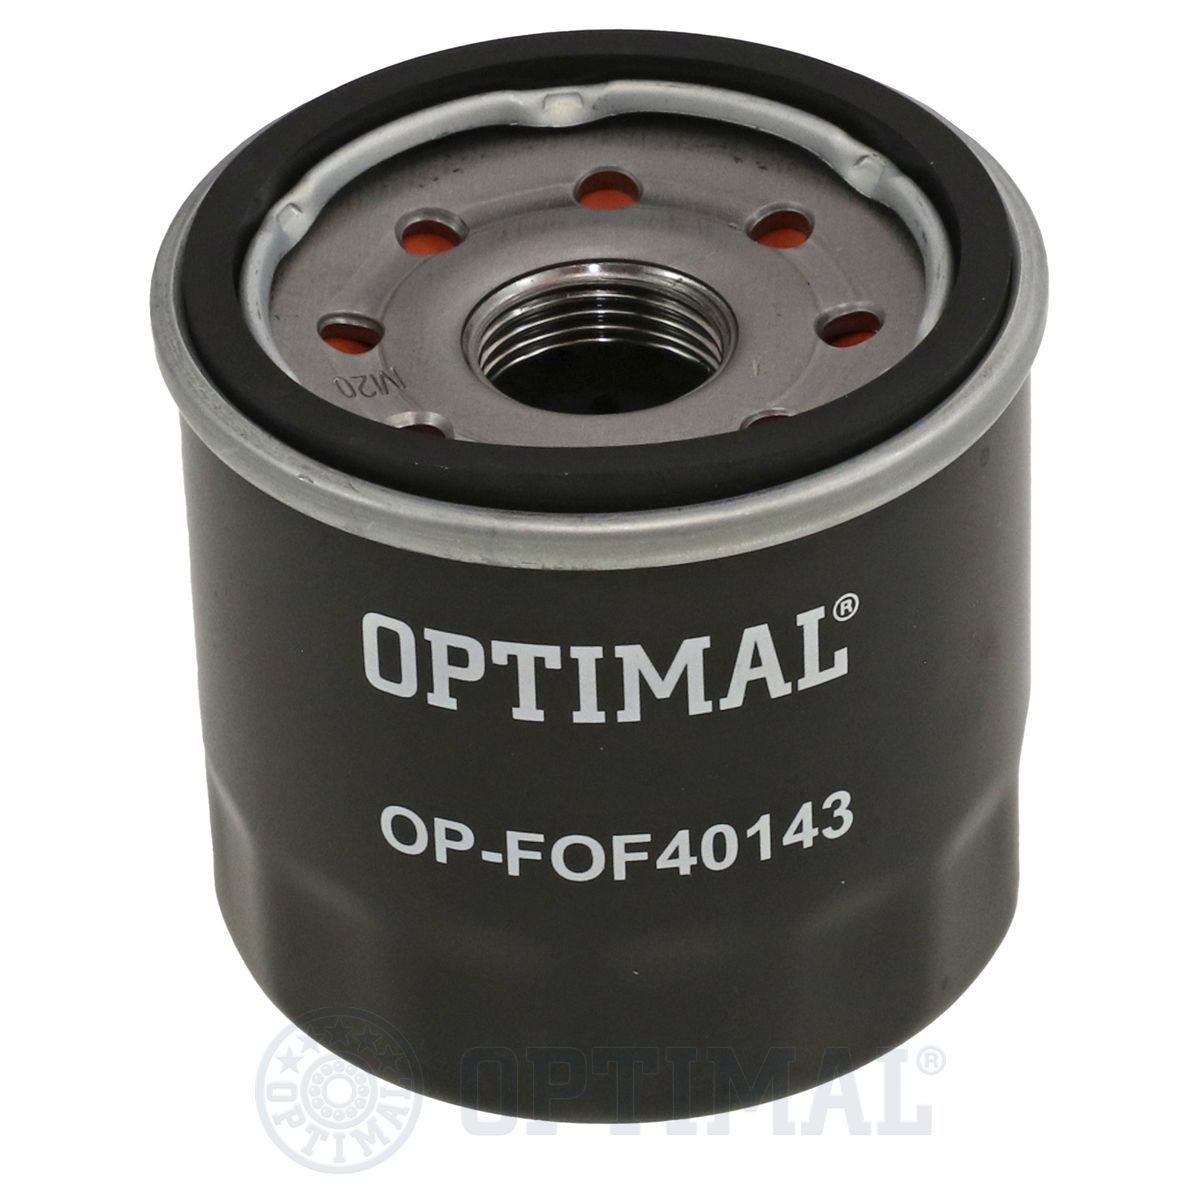 OPTIMAL OP-FOF40143 Oil filter 15400-ZZ3-003